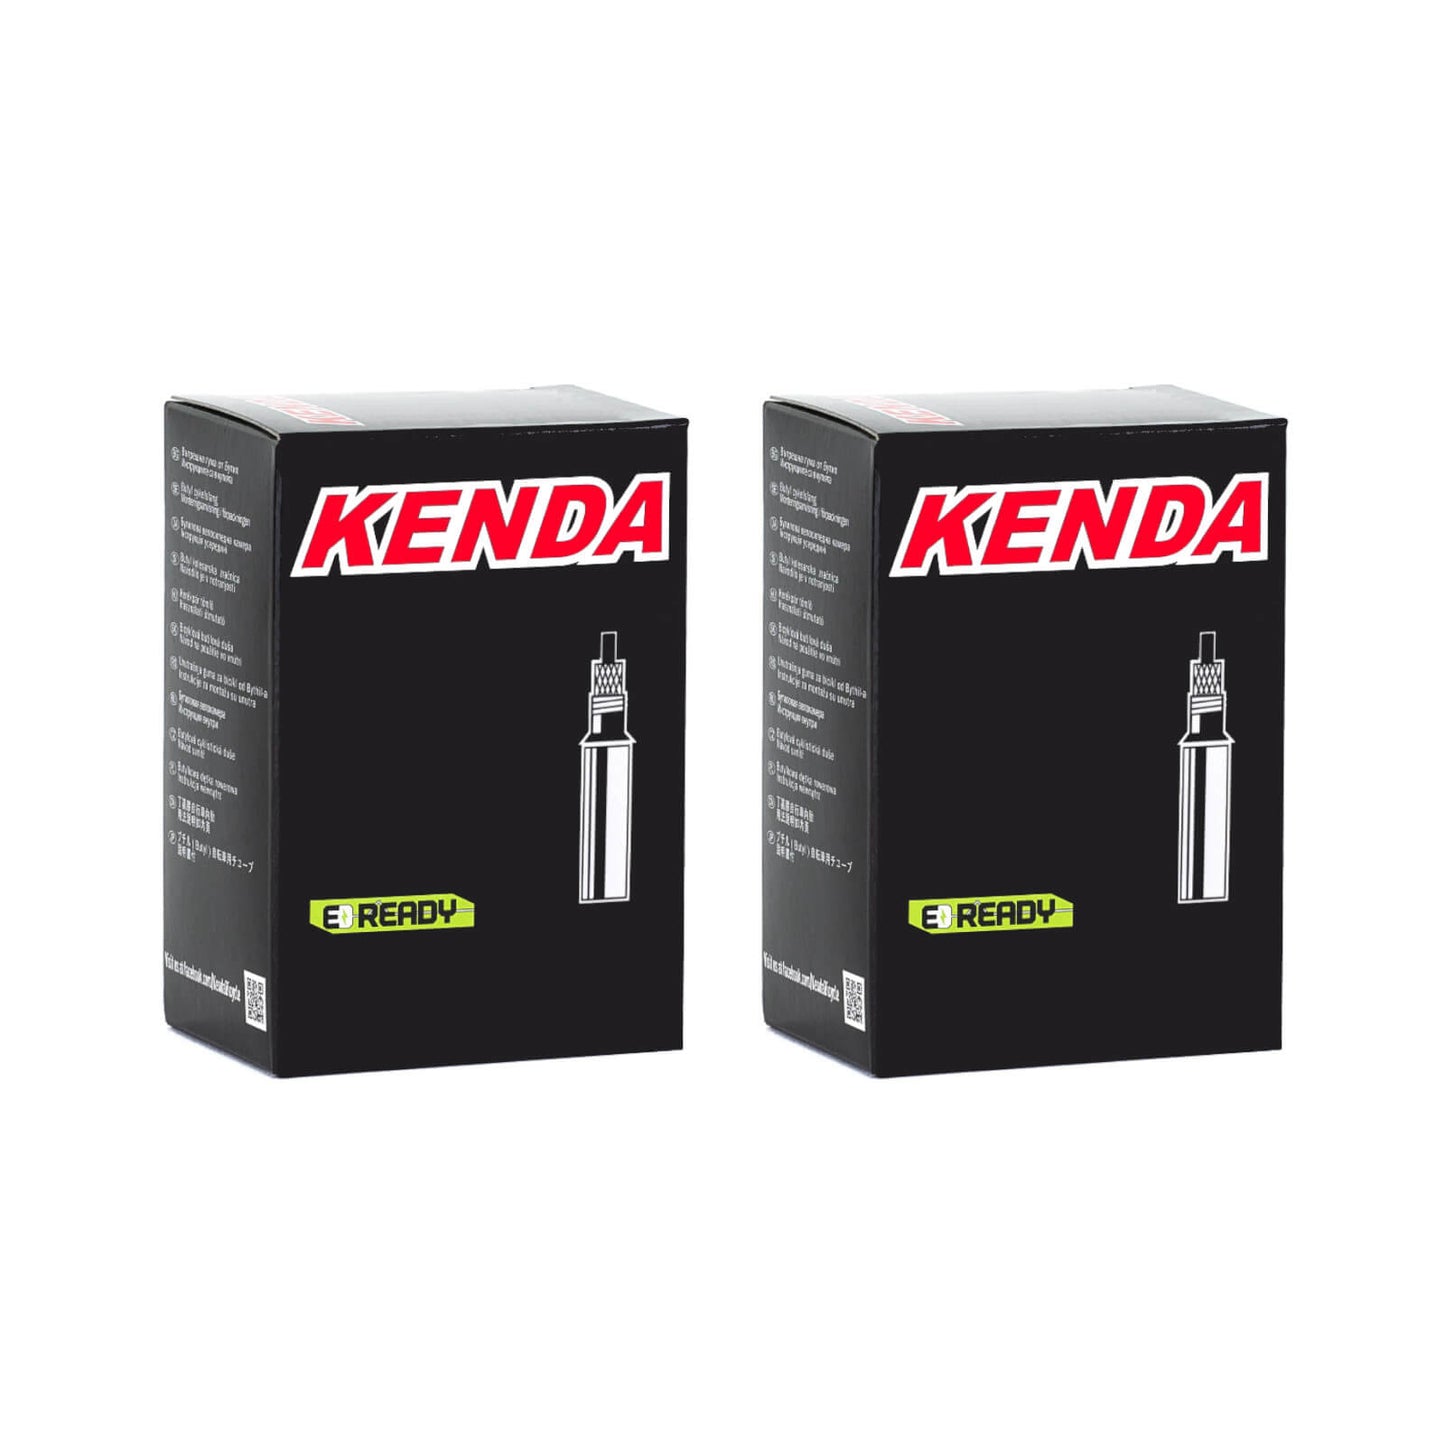 Kenda 26x1.75-2.35" 26 Inch Presta Valve Bike Inner Tube Pack of 2